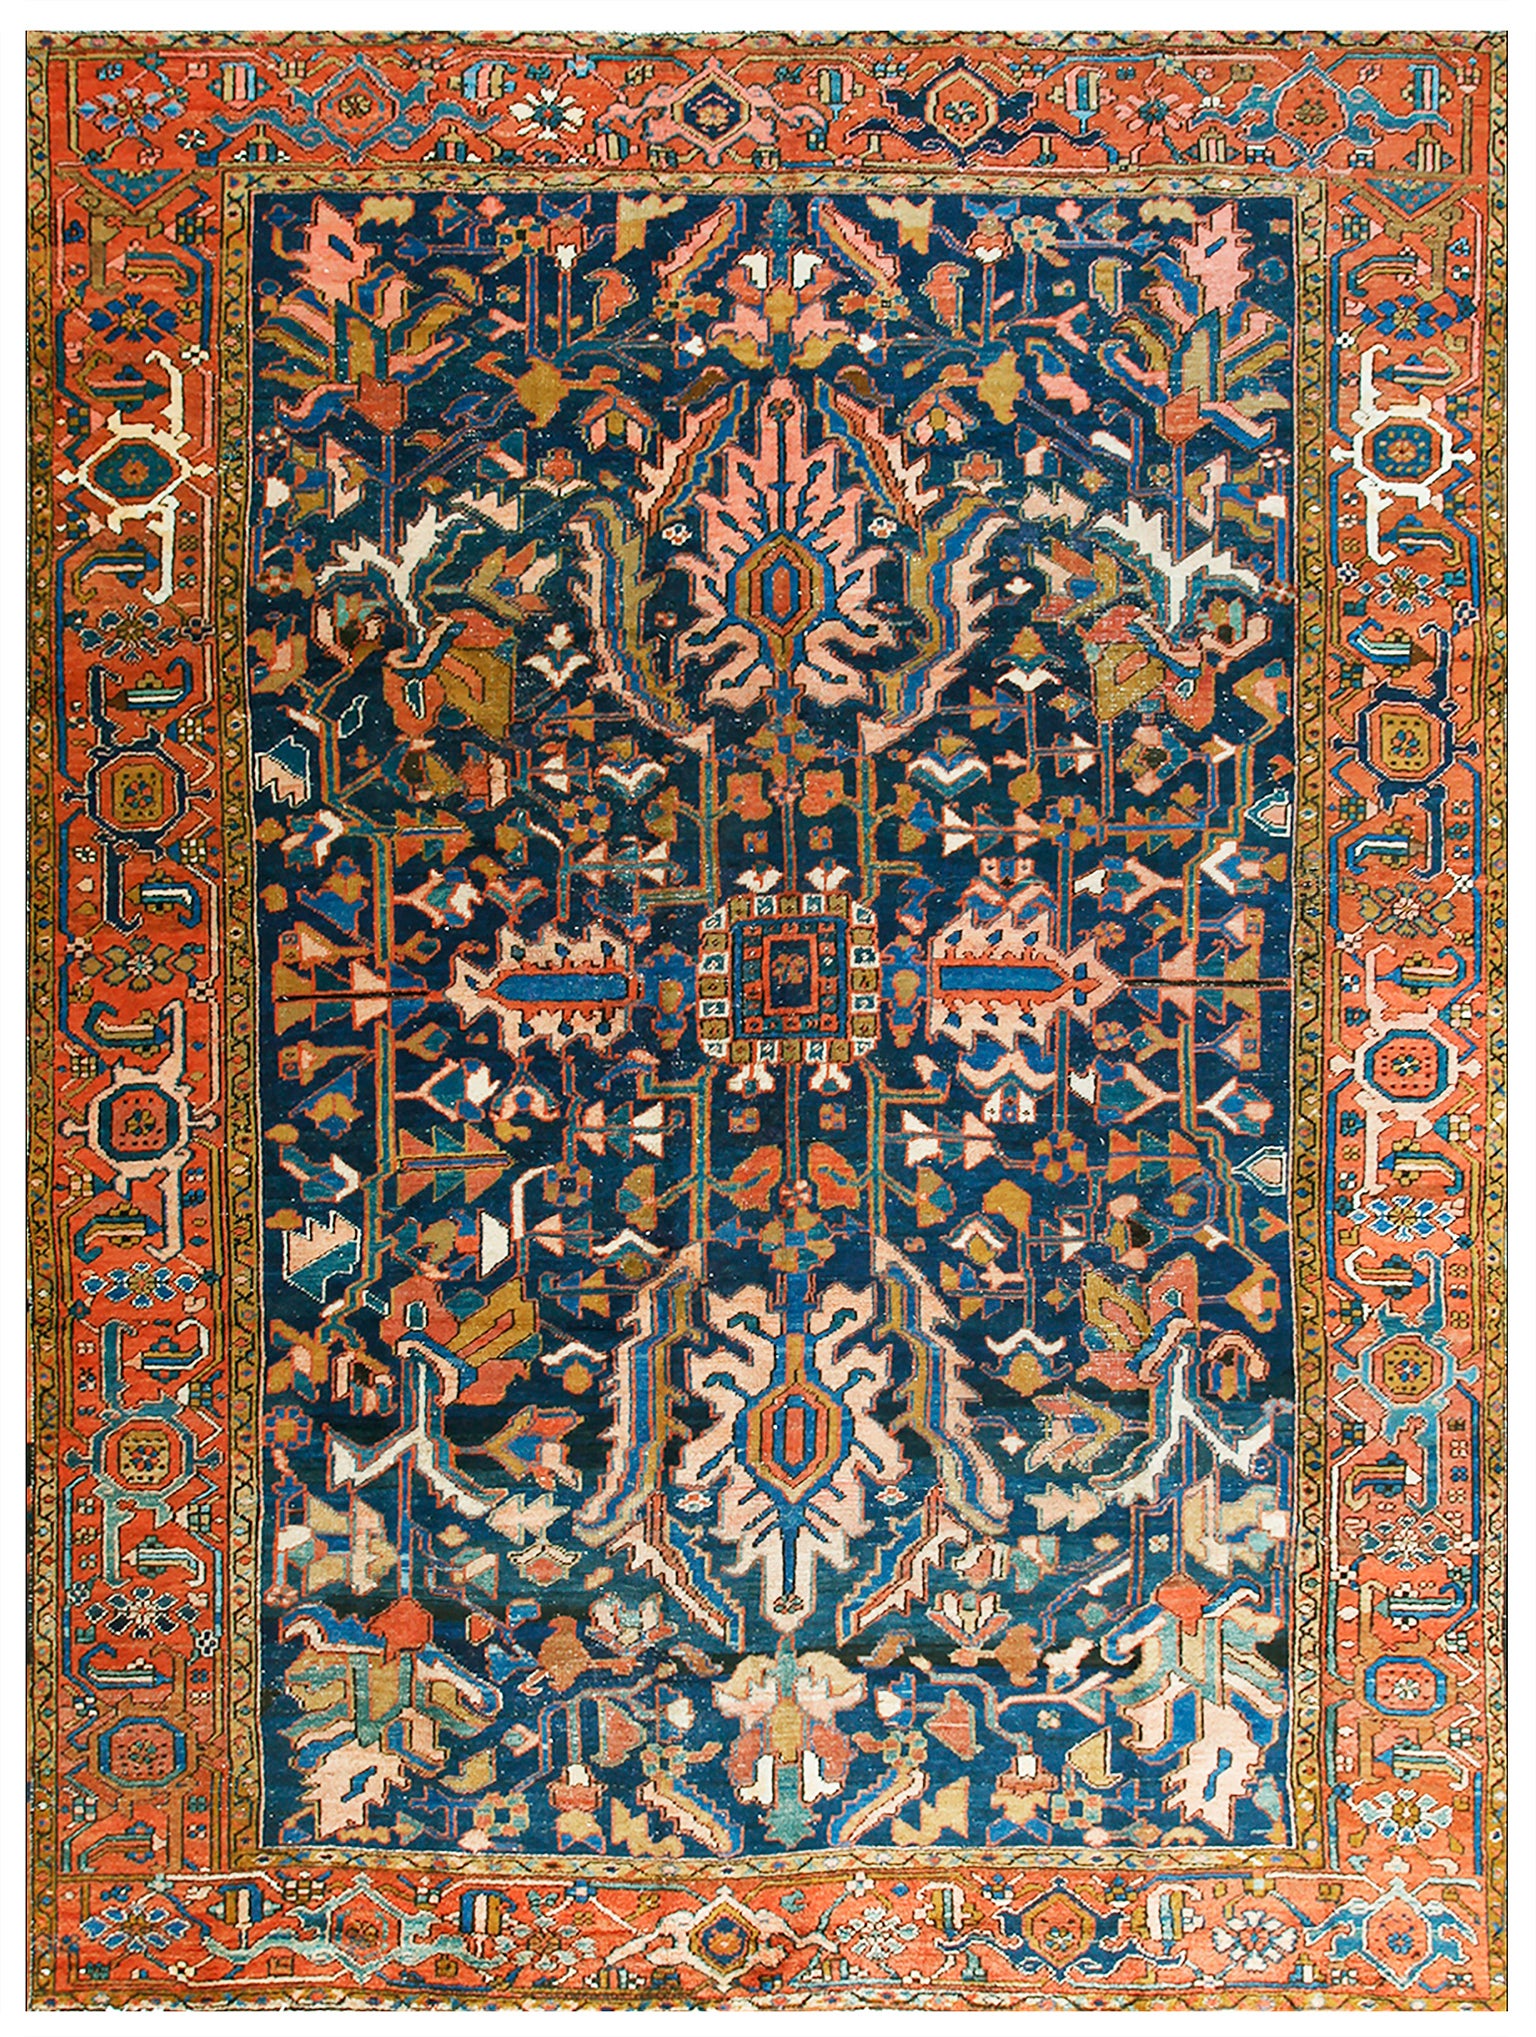 Early 20th Century Persian Heriz Carpet ( 9' x 11'9" - 275 x 358 )